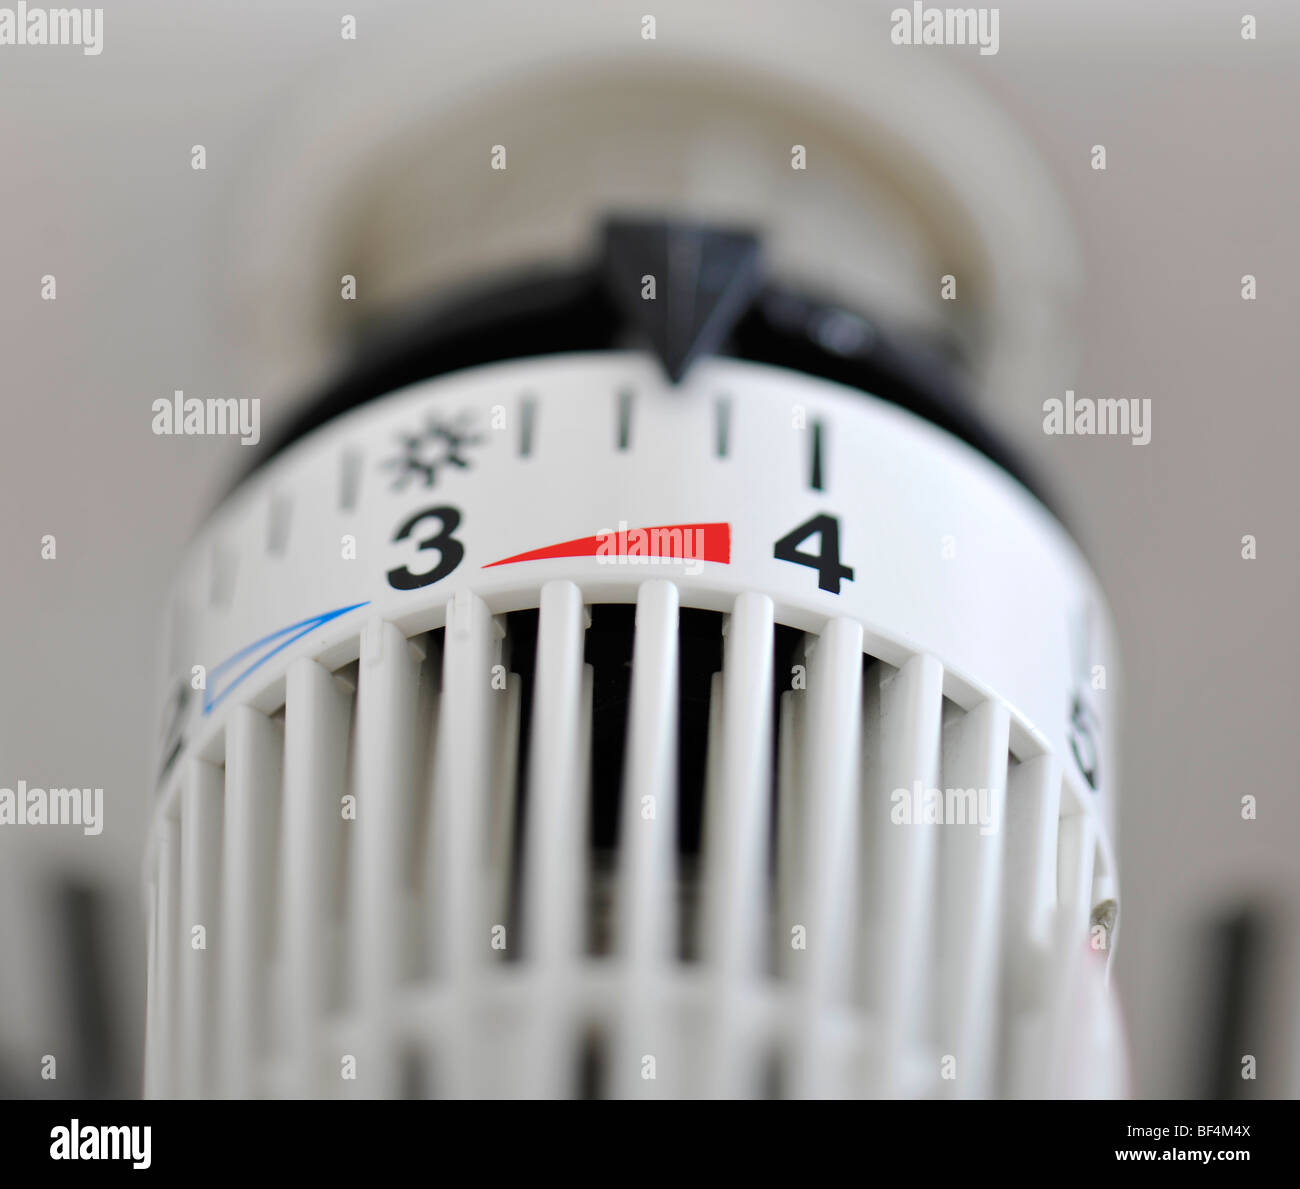 Heizungsregler - Thermostat Stockfotografie - Alamy